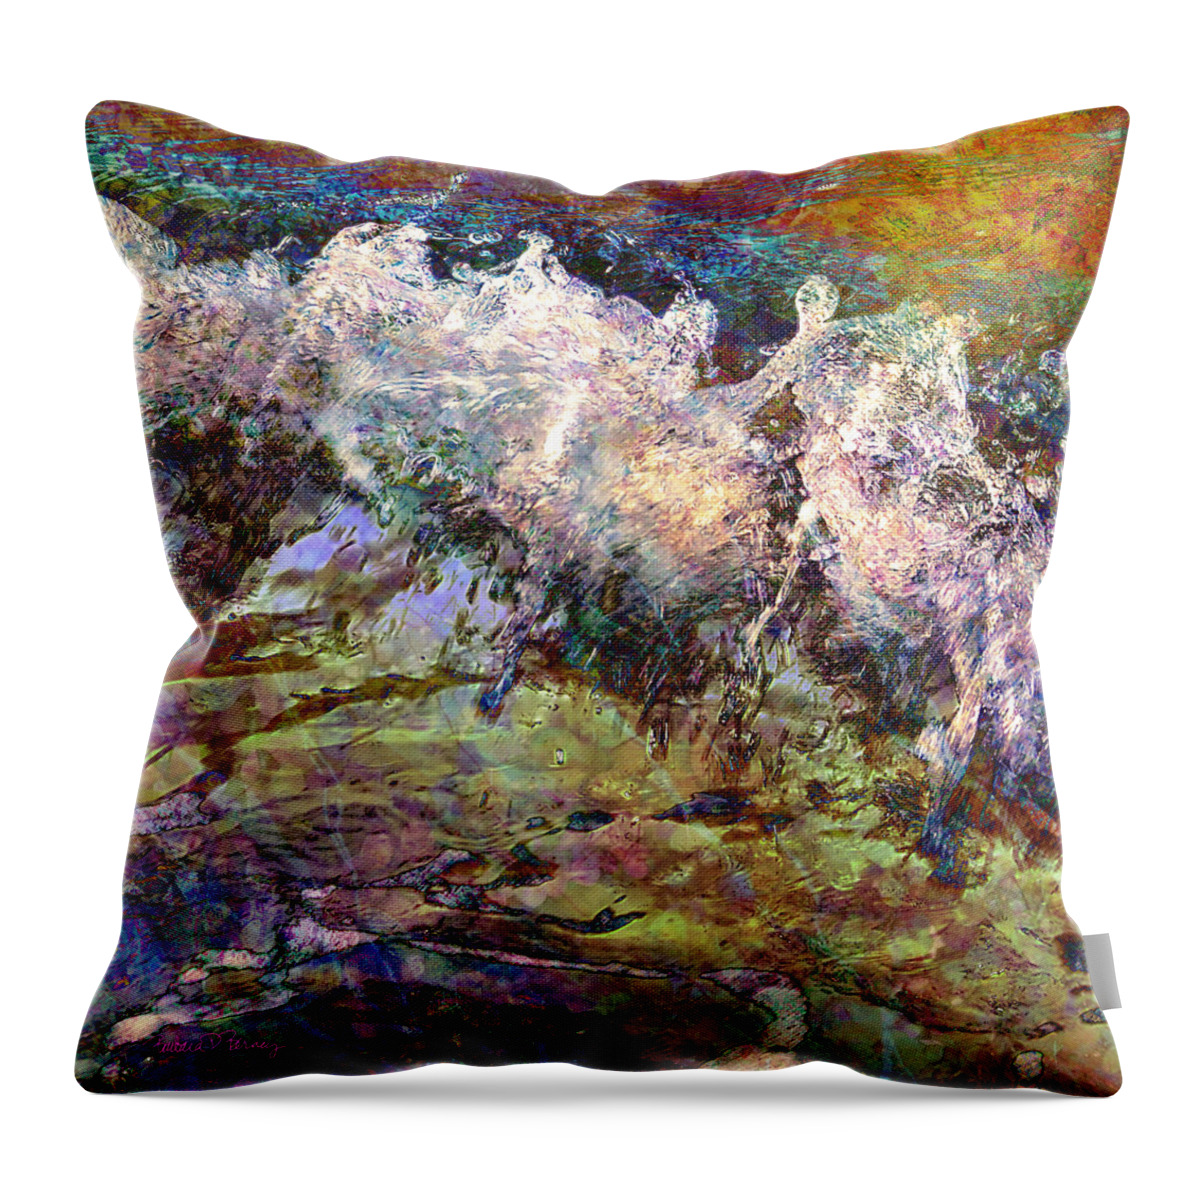 Ocean Throw Pillow featuring the digital art Seascape by Barbara Berney